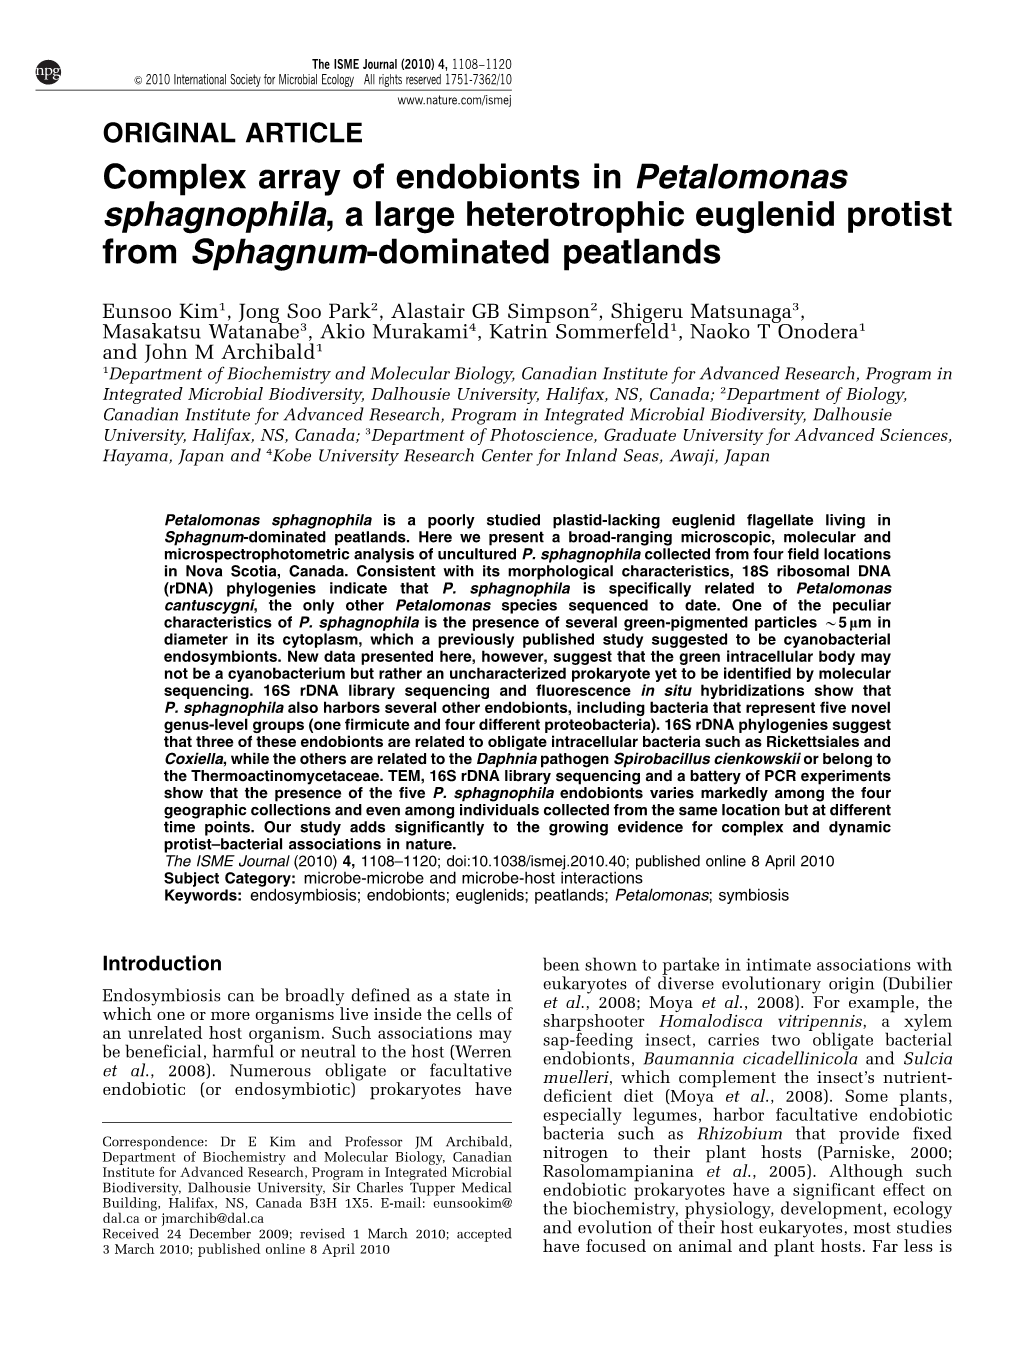 Complex Array of Endobionts in Petalomonas Sphagnophila, a Large Heterotrophic Euglenid Protist from Sphagnum-Dominated Peatlands